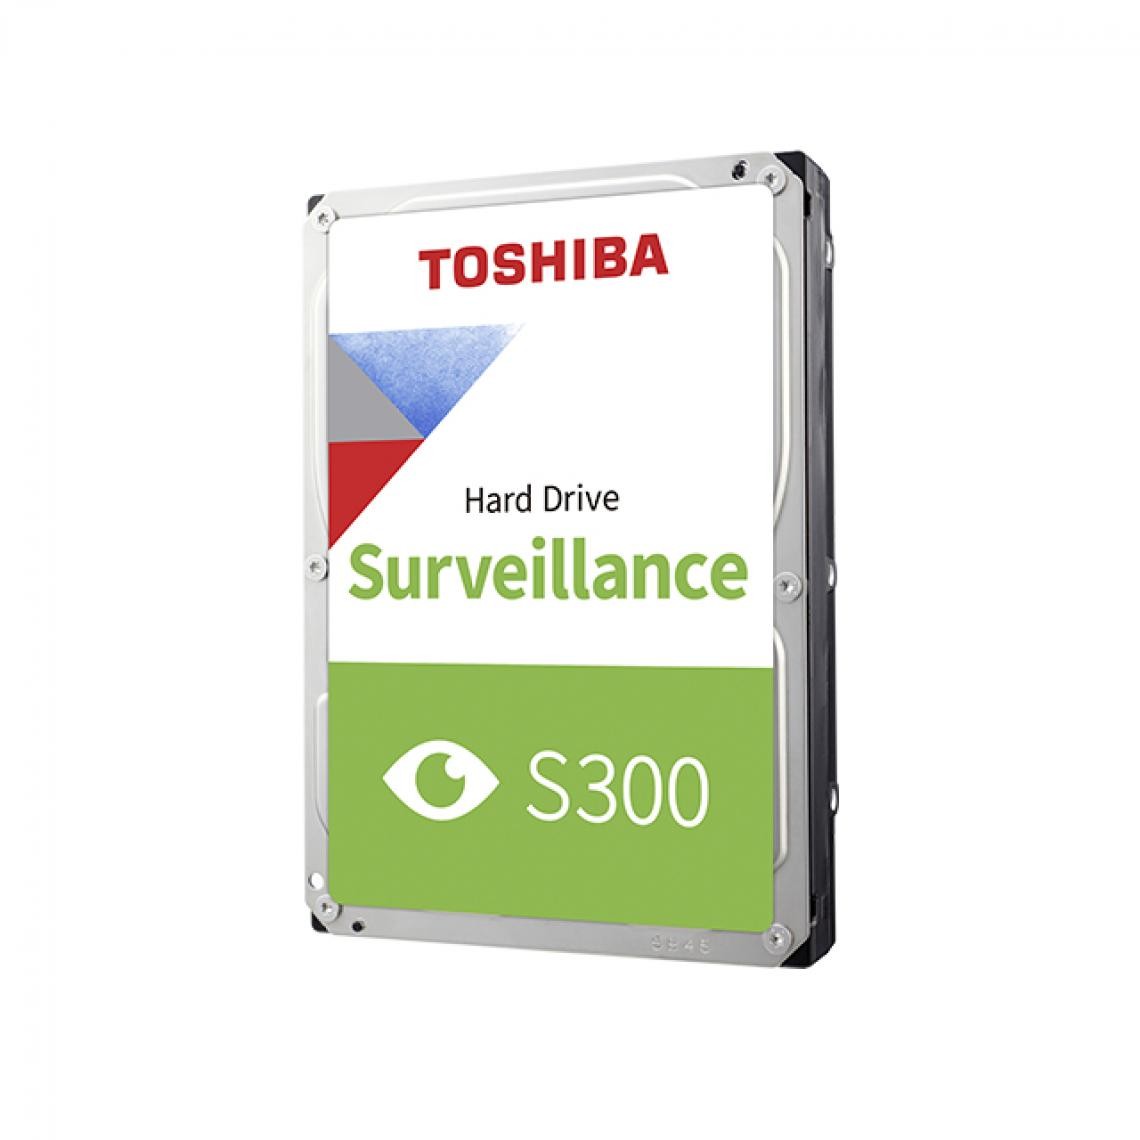 Toshiba - S300 Surveillance Hard Drive 4To S300 Surveillance Hard Drive 4To 3.5p BULK - Disque Dur interne